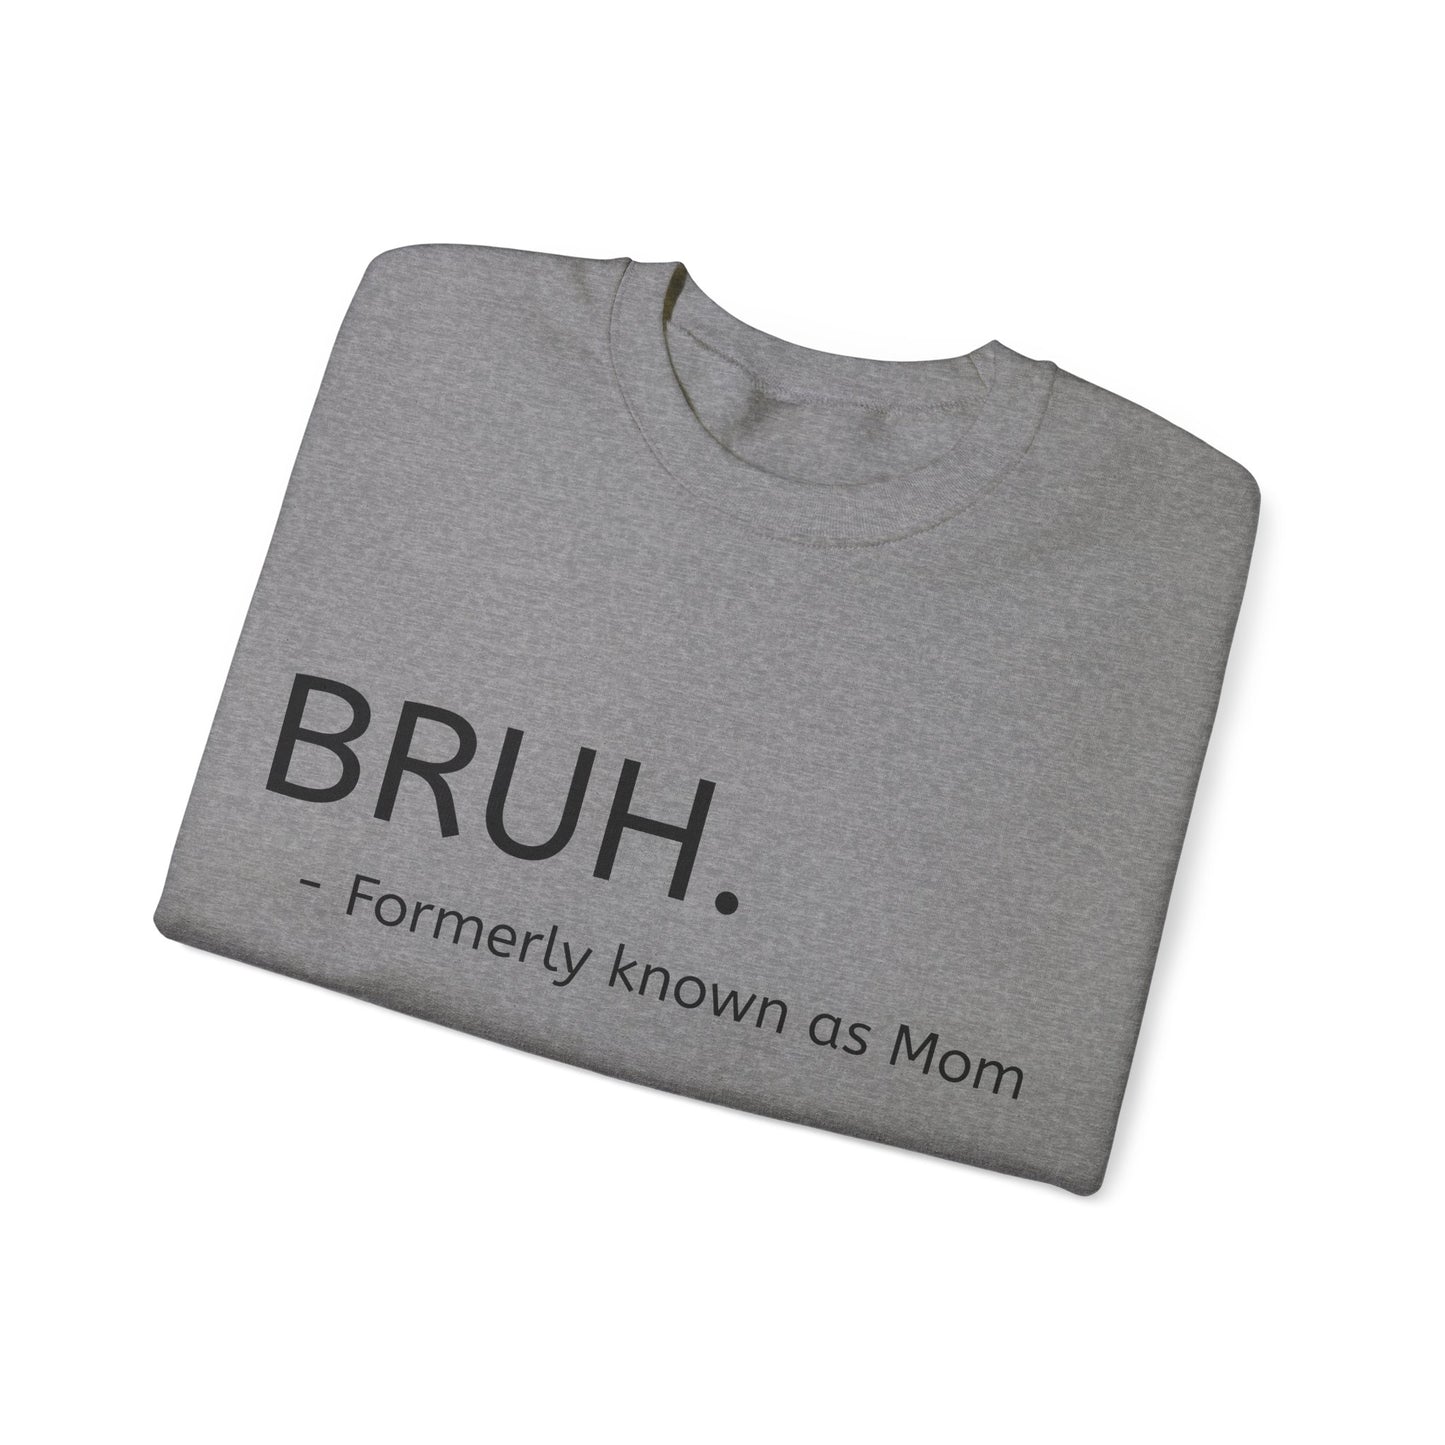 Bruh. Formerly Known as Mom Sweatshirt